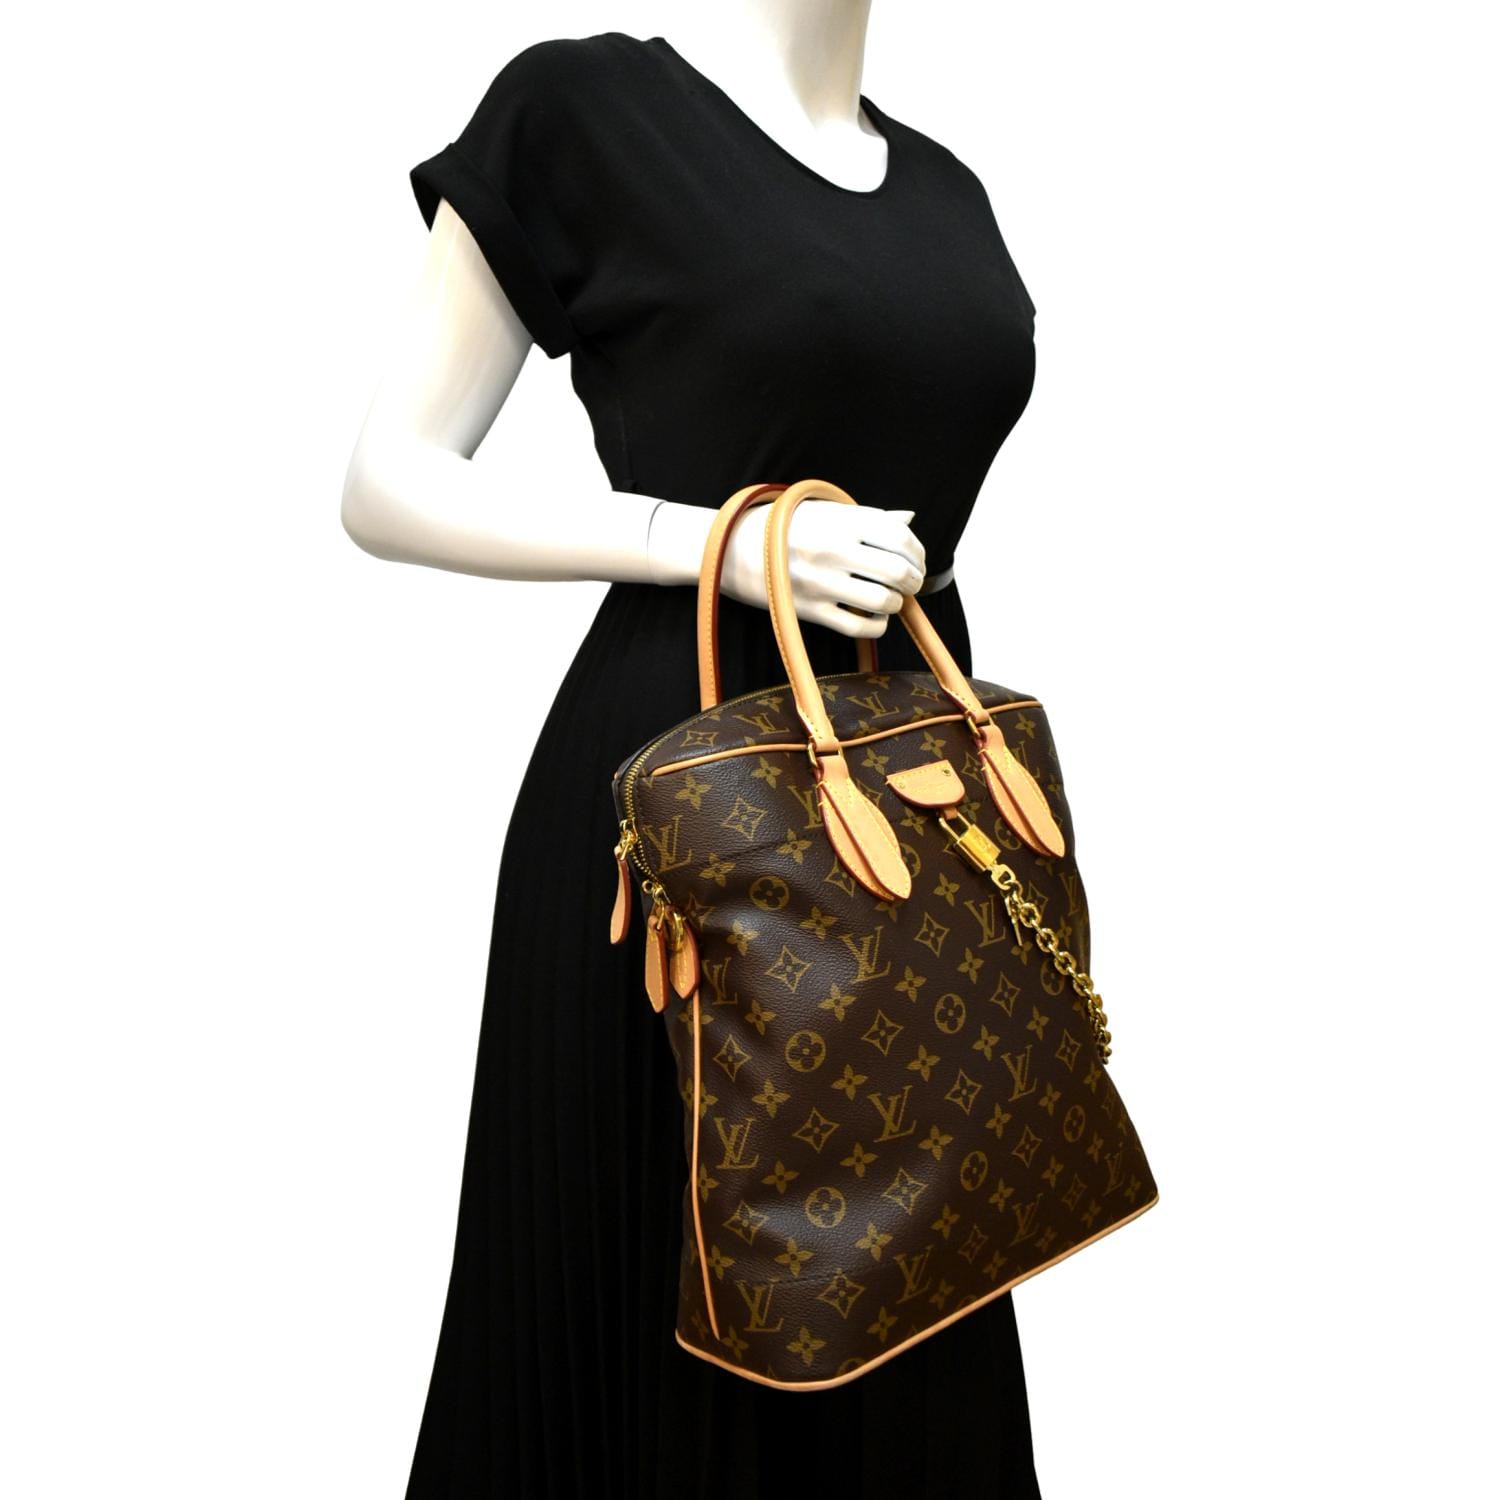 Louis Vuitton - Carryall mm Bag - Monogram - Women - Luxury